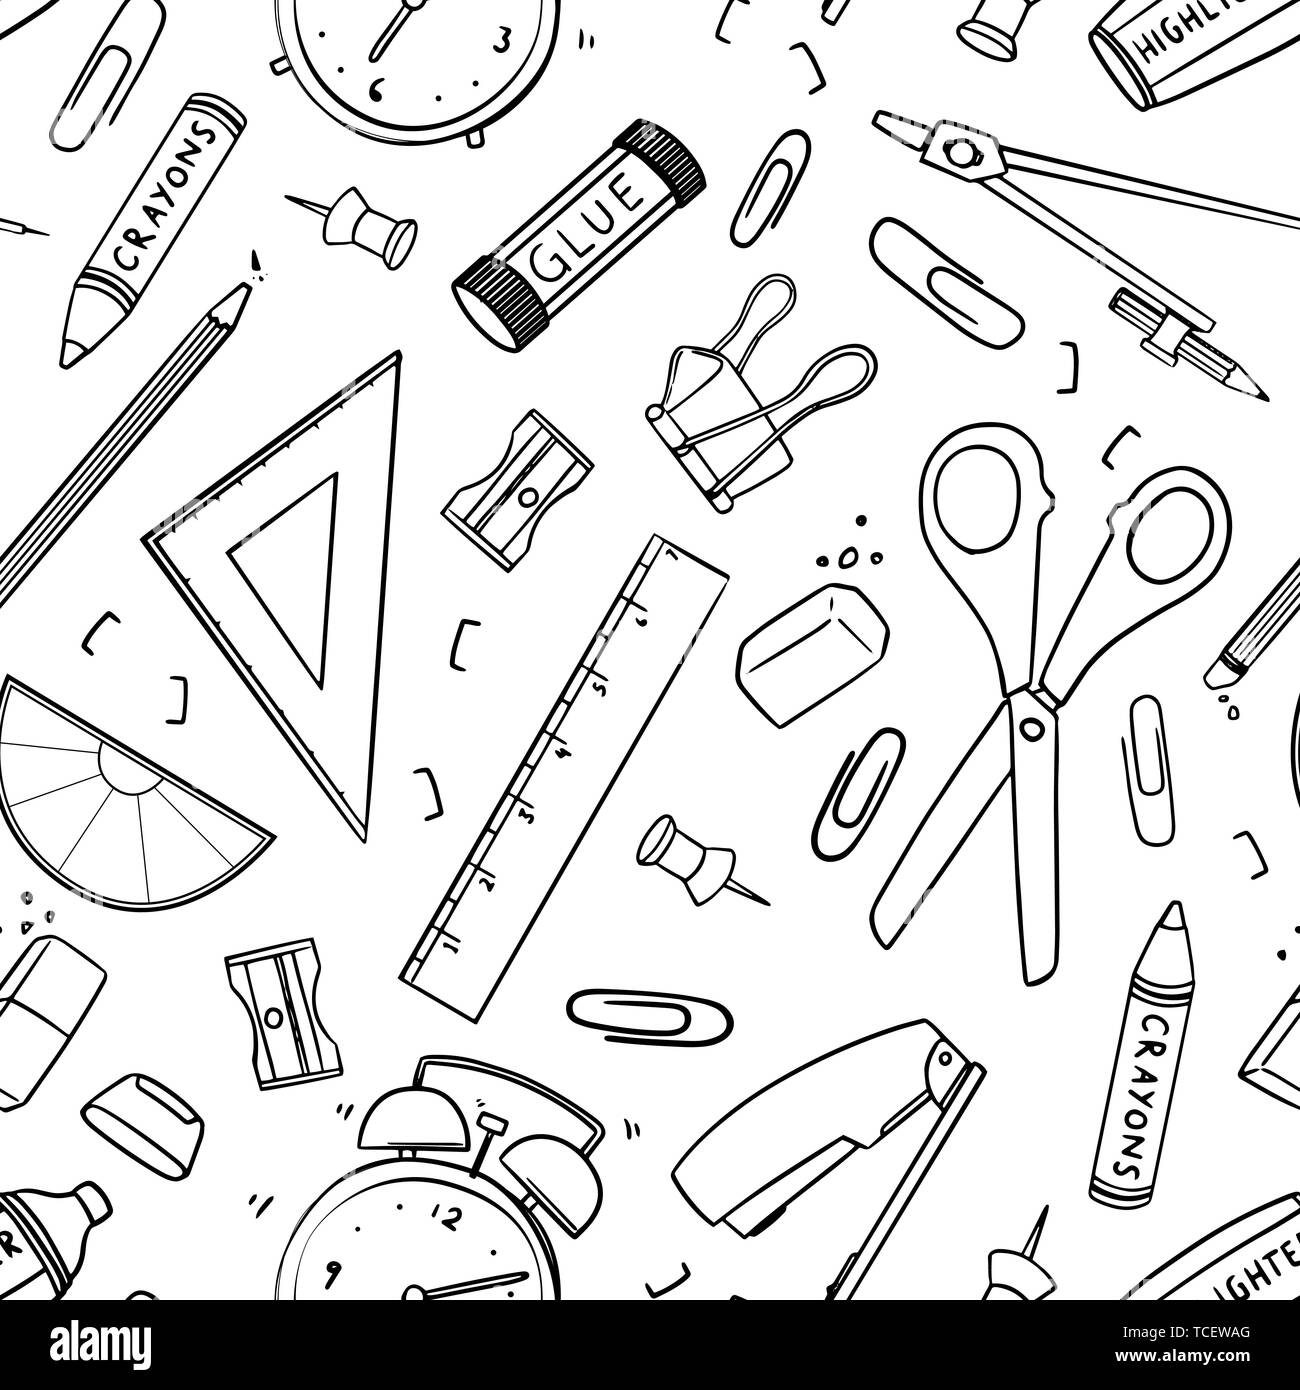 Stationary tool pattern. Seamless vector design; Hand drawn outline of eraser, triangular ruler, scissor, sharpener, pencil, glue stick, paper clip, c Stock Vector